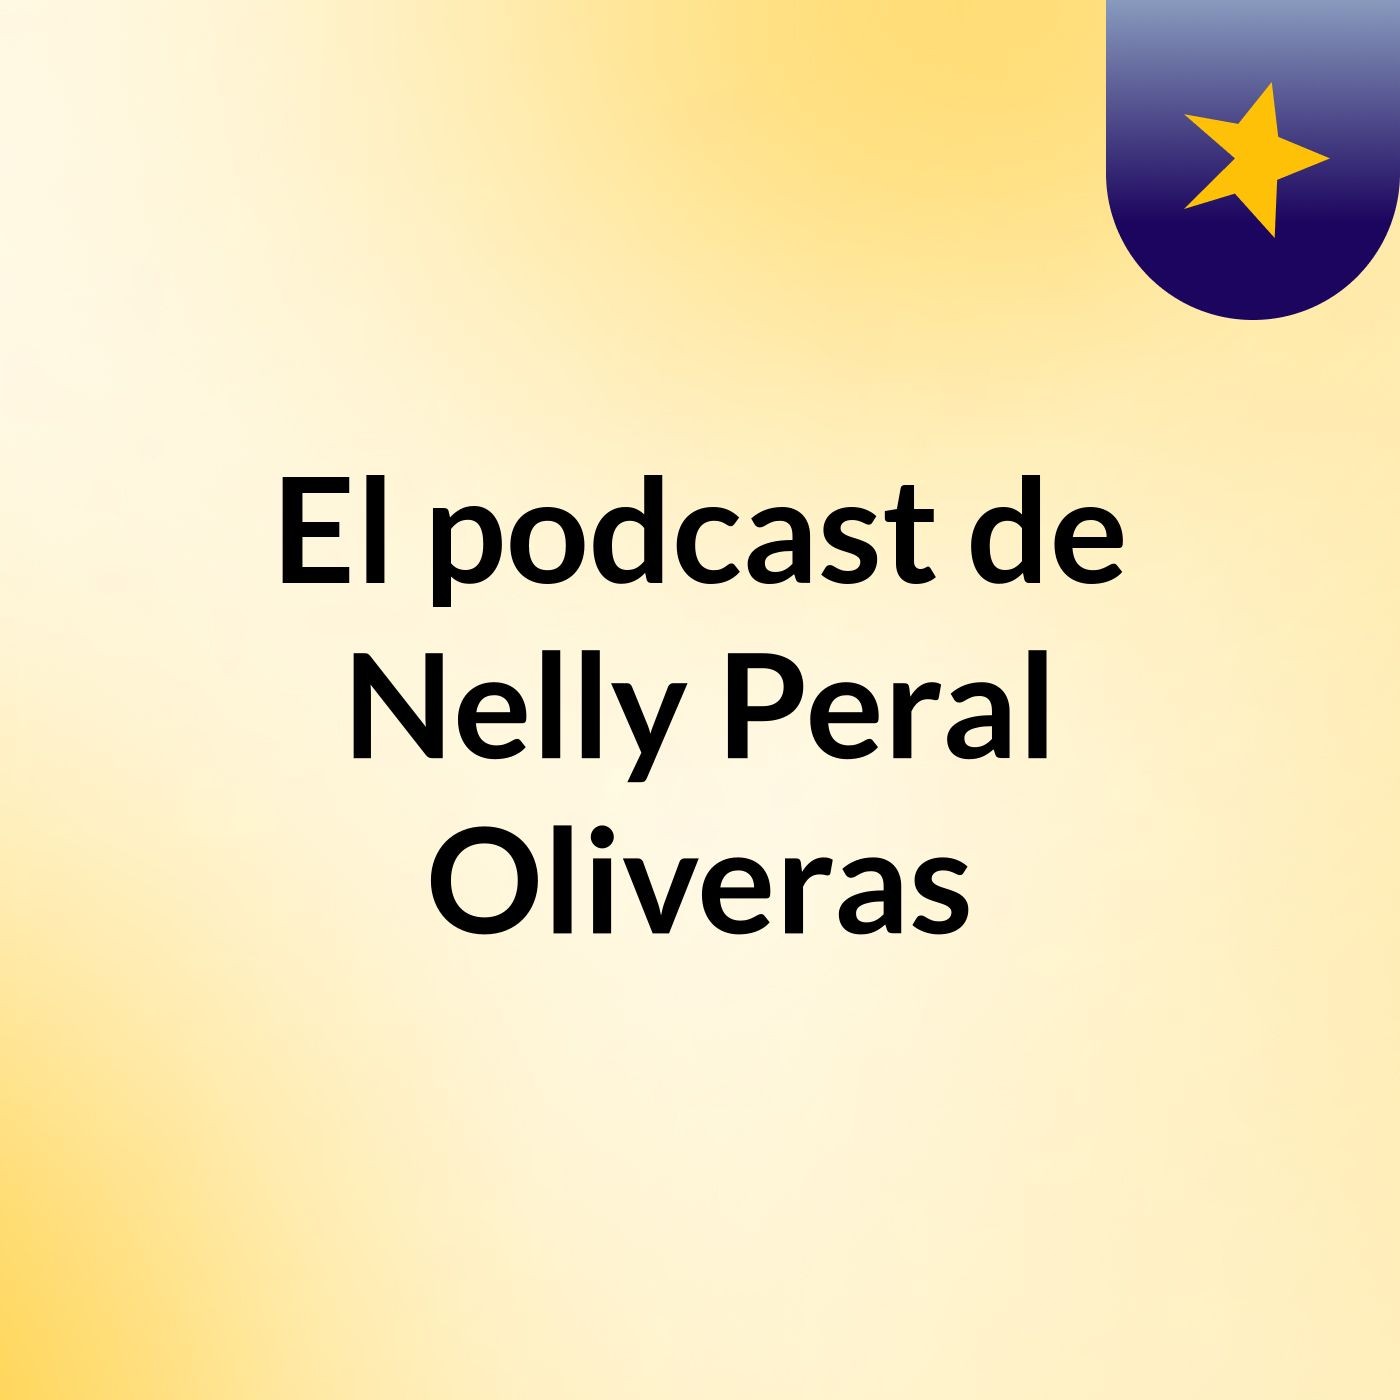 El podcast de Nelly Peral Oliveras